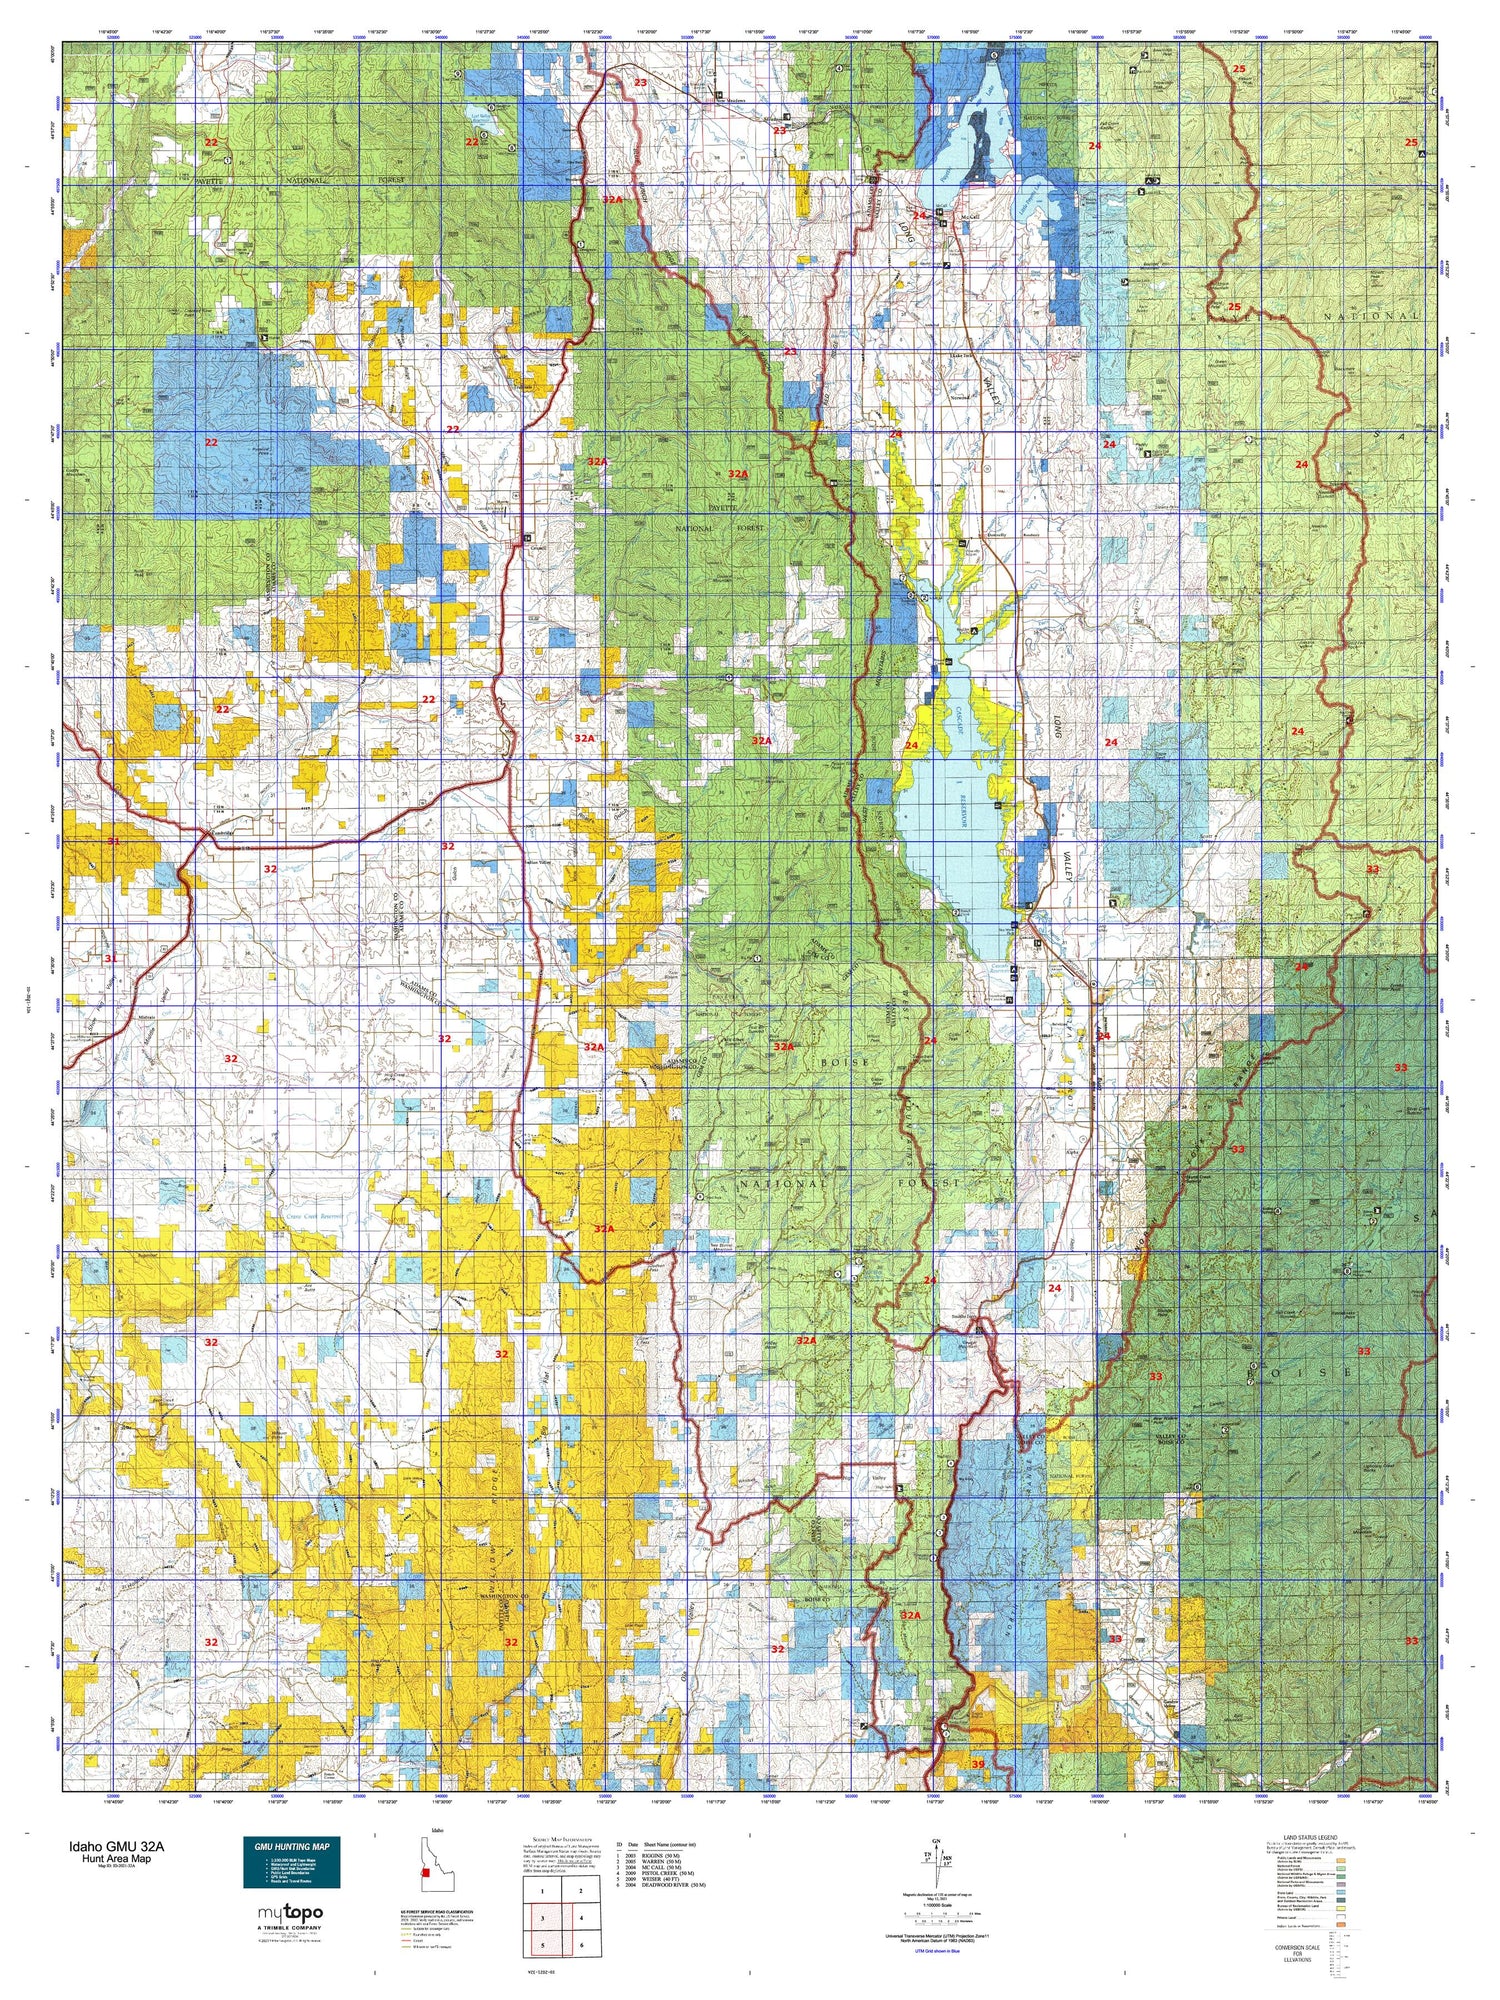 Idaho GMU 32A Map Image